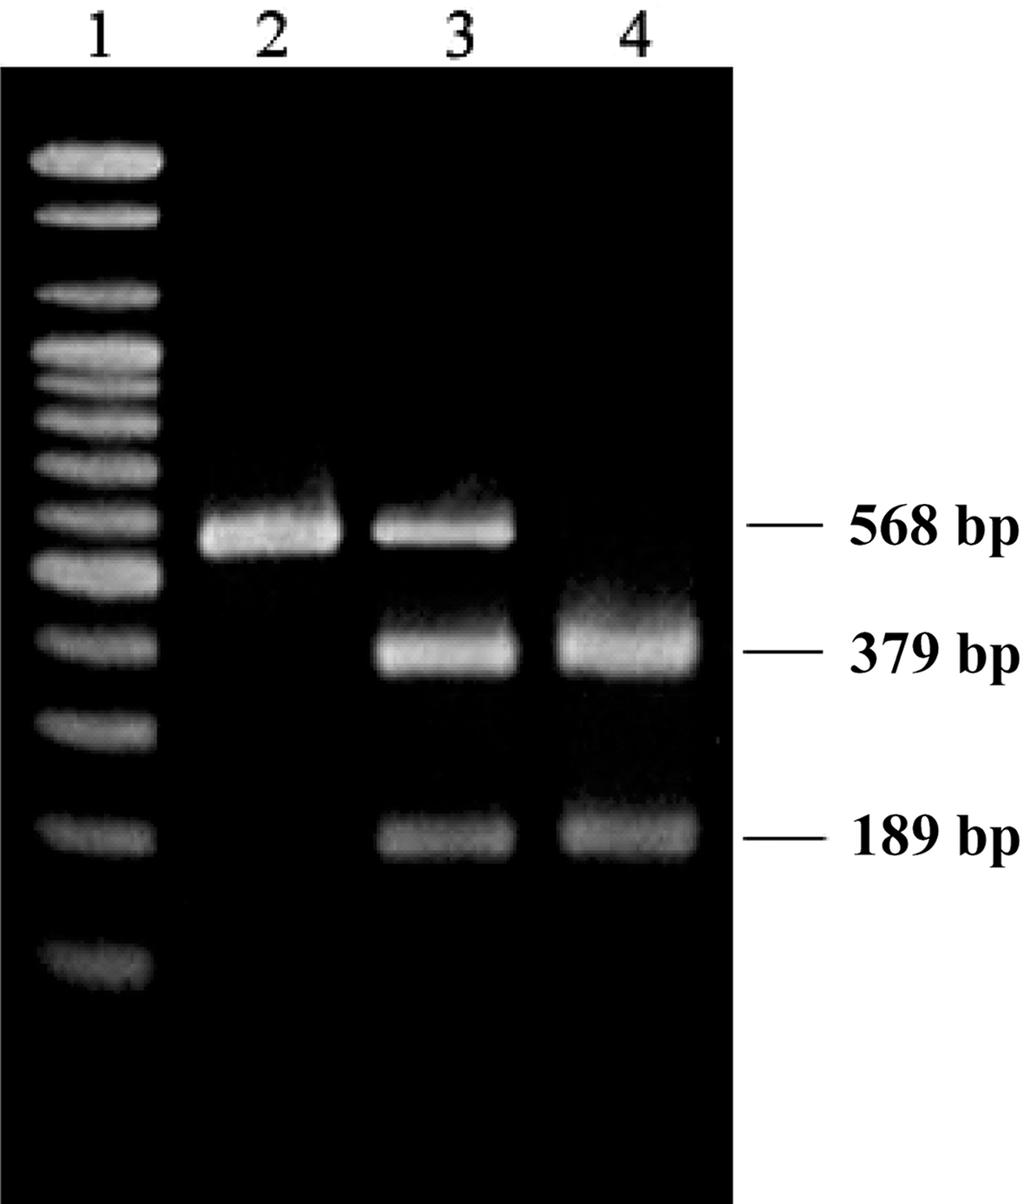 126 Áû xá Á Á Double strand based DHPLC RFLP w PCR e š 95 o C 10 k z 45 x w x k z DHPLC w. f 58 o C w DNA ù t xk w x w. Fig. 3 G/C genotype 3 vj ùkûš, G/G genotype v j xk. Fig. 1. Analysis of a single nucleotide polymorphism at -174 (G/C) in the IL-6 gene promoter.